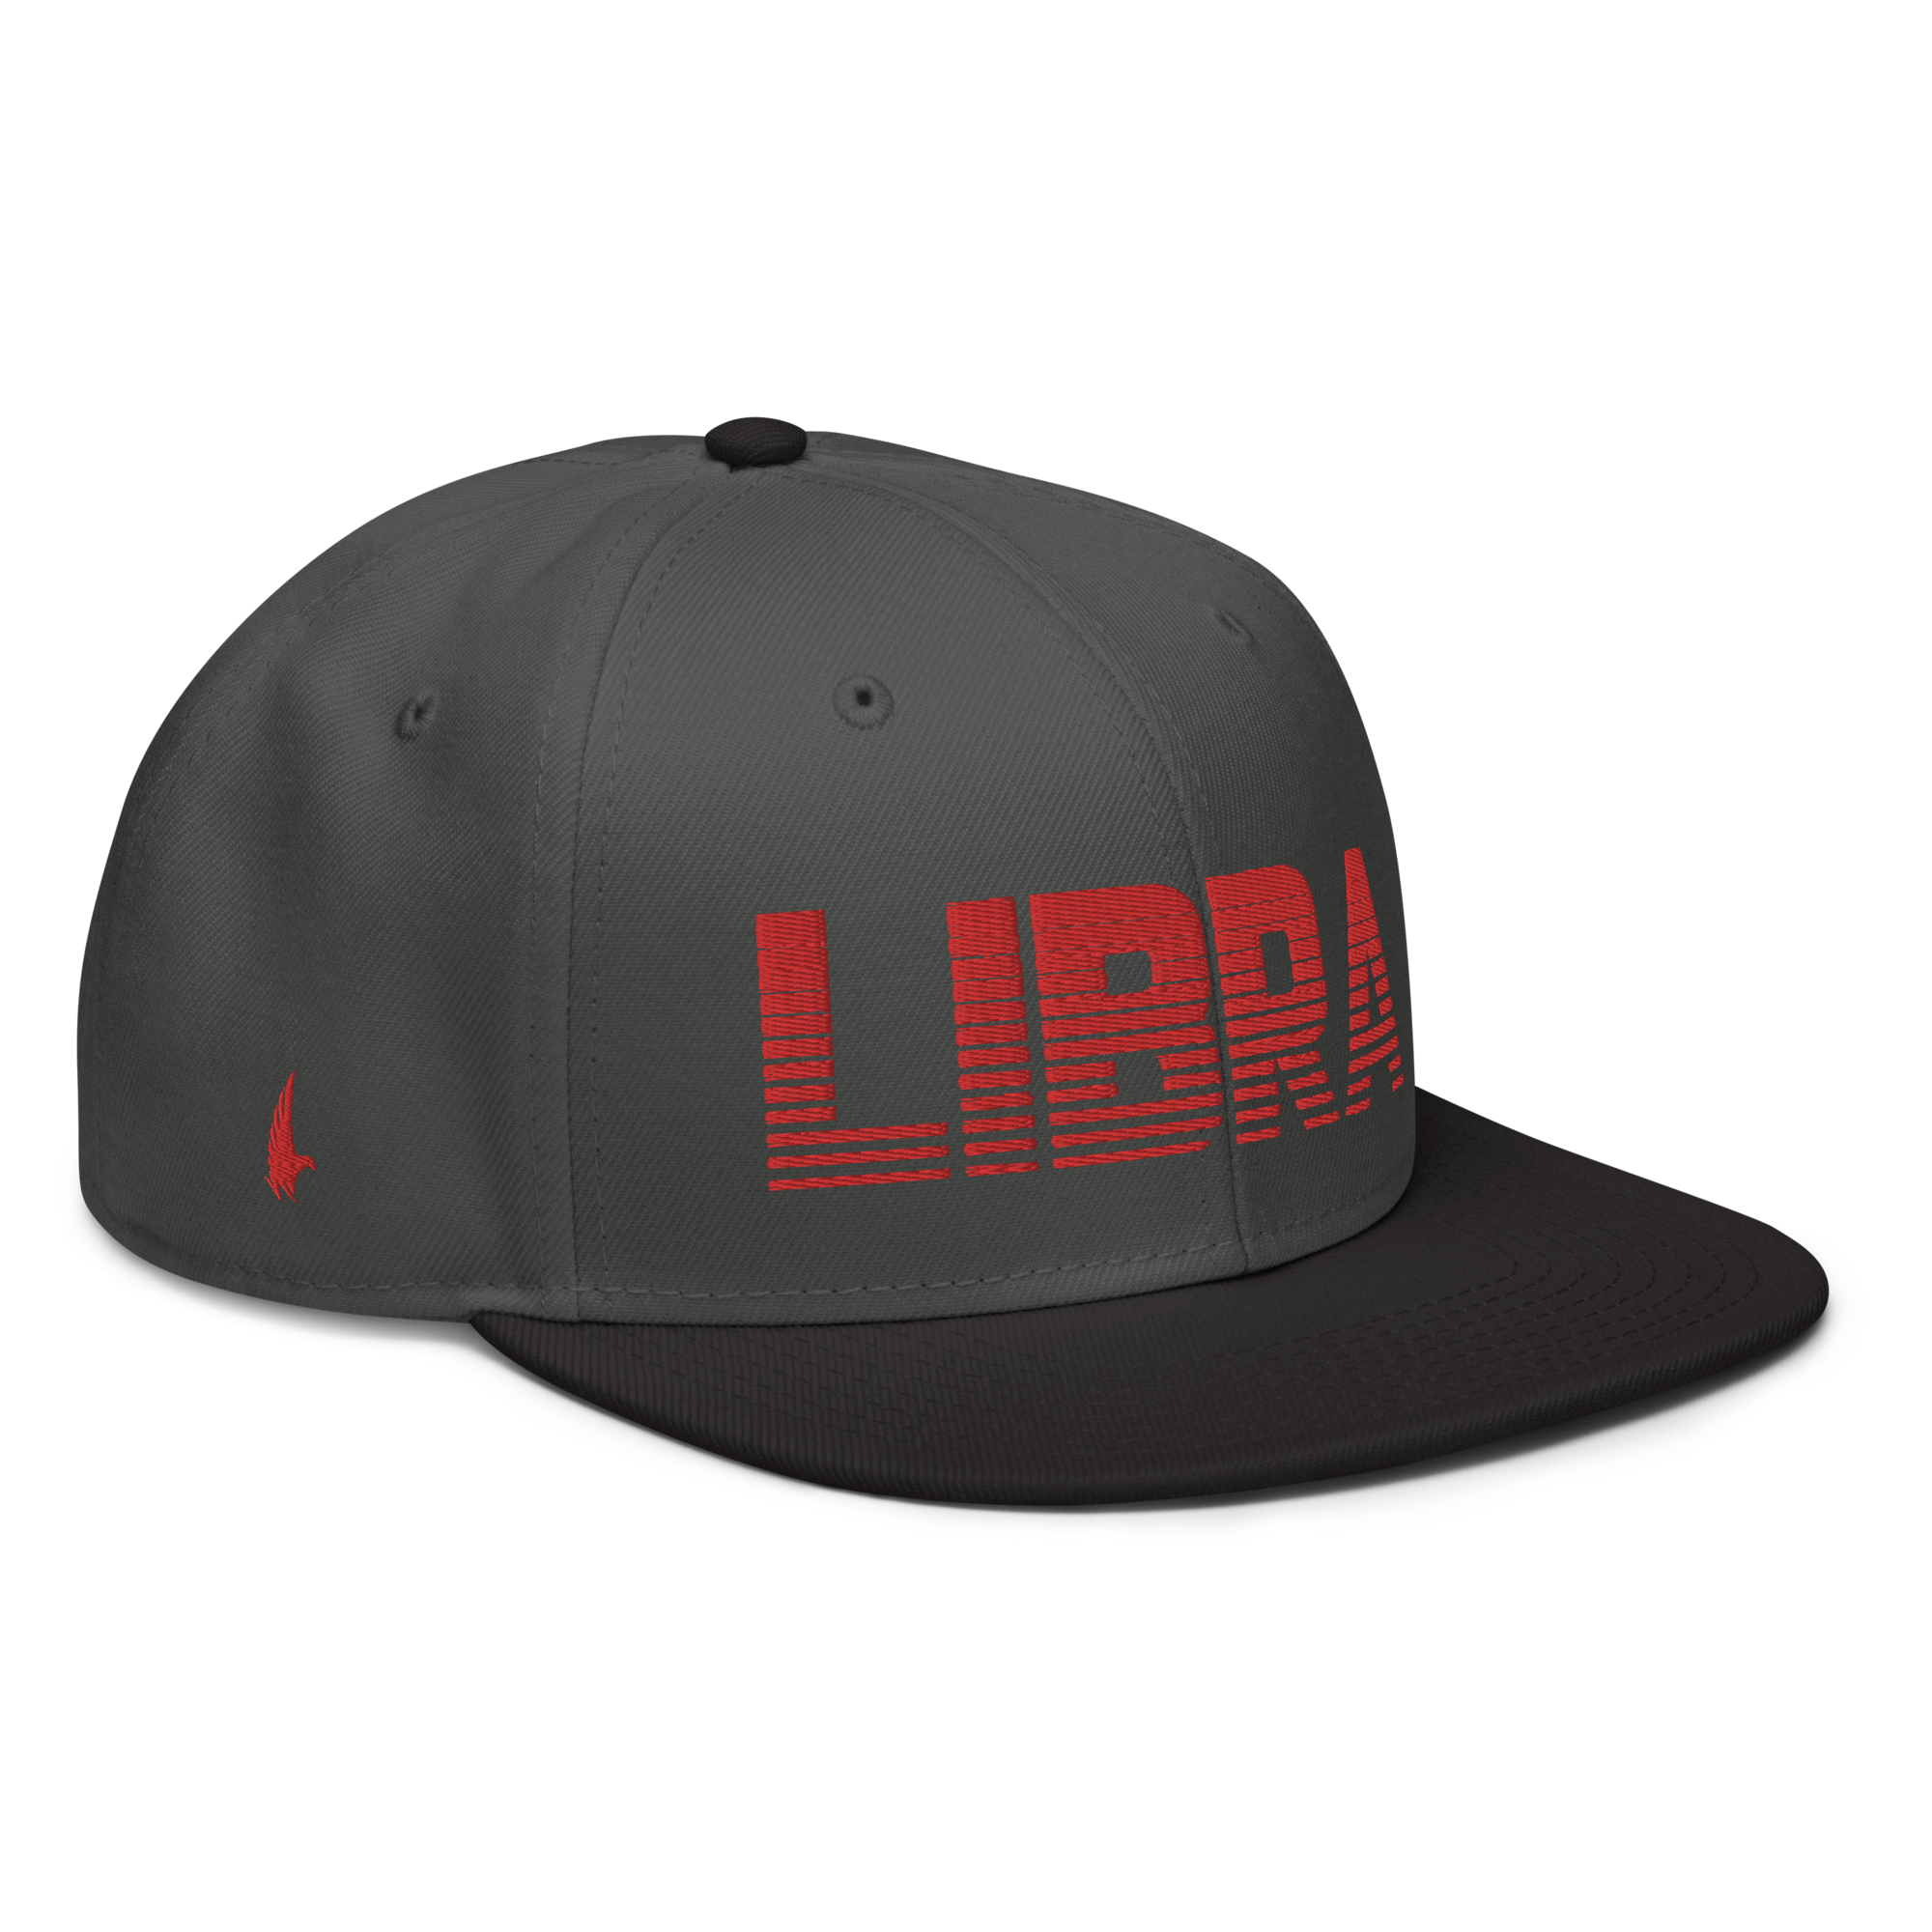 Libra Snapback Hat - Charcoal Gray / Red / Black - Loyalty Vibes